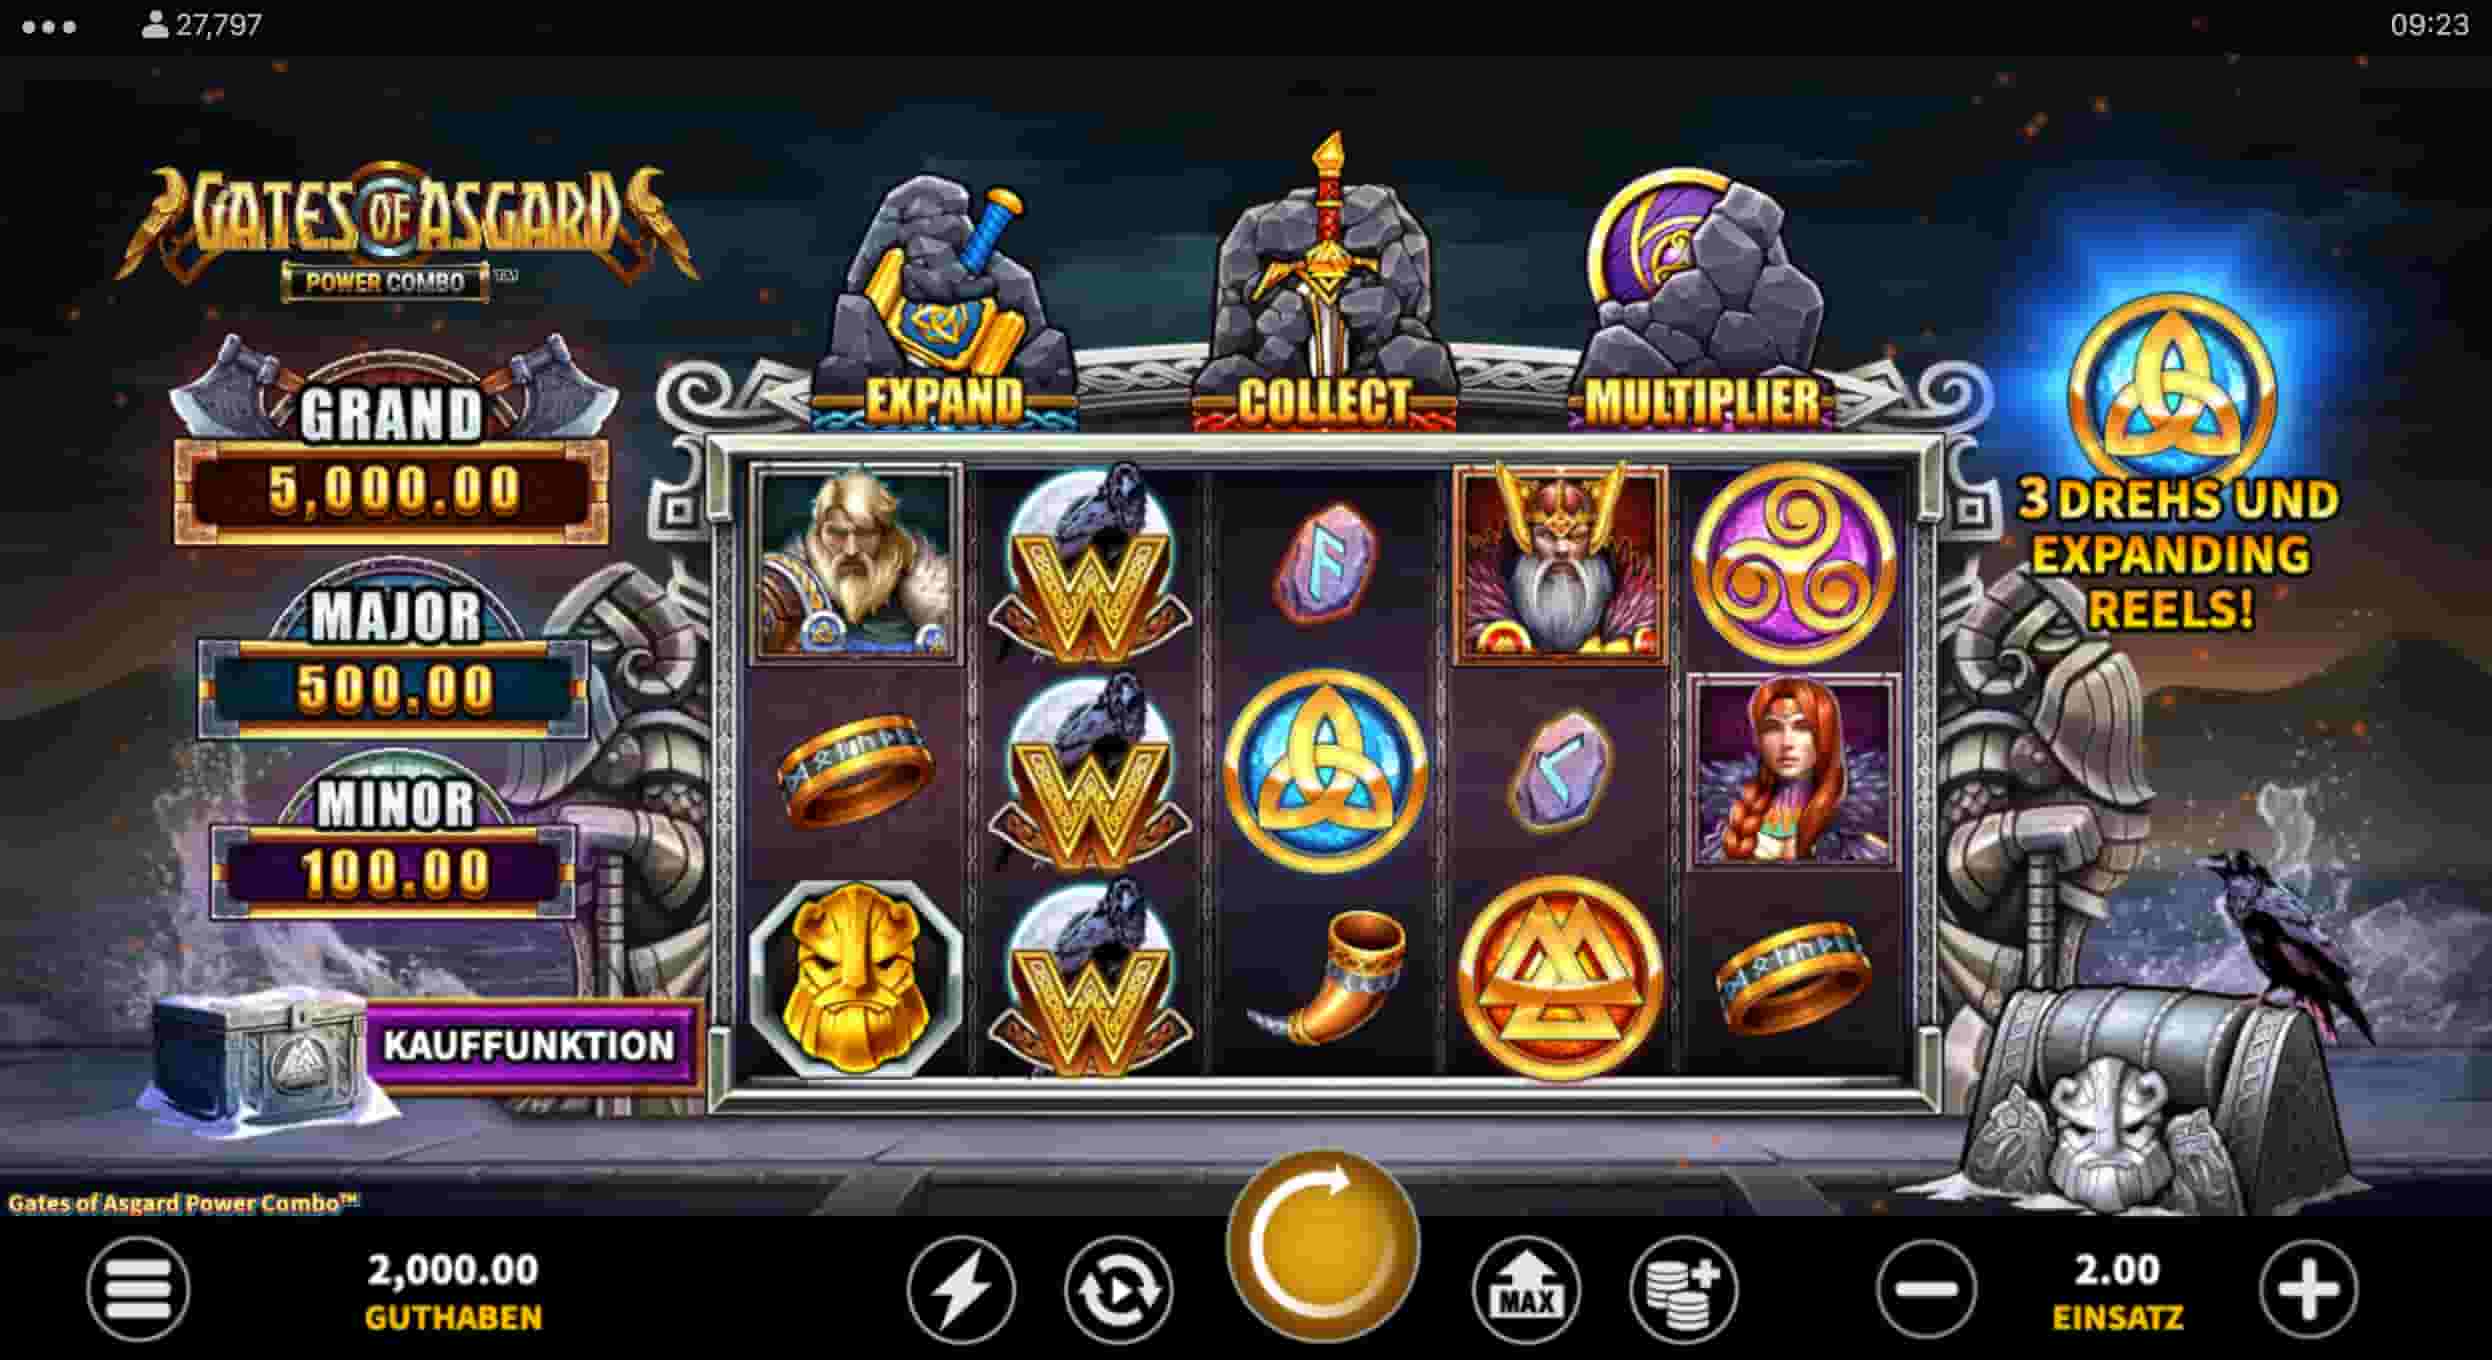 Gates of Asgard Power Combo screenshot 1